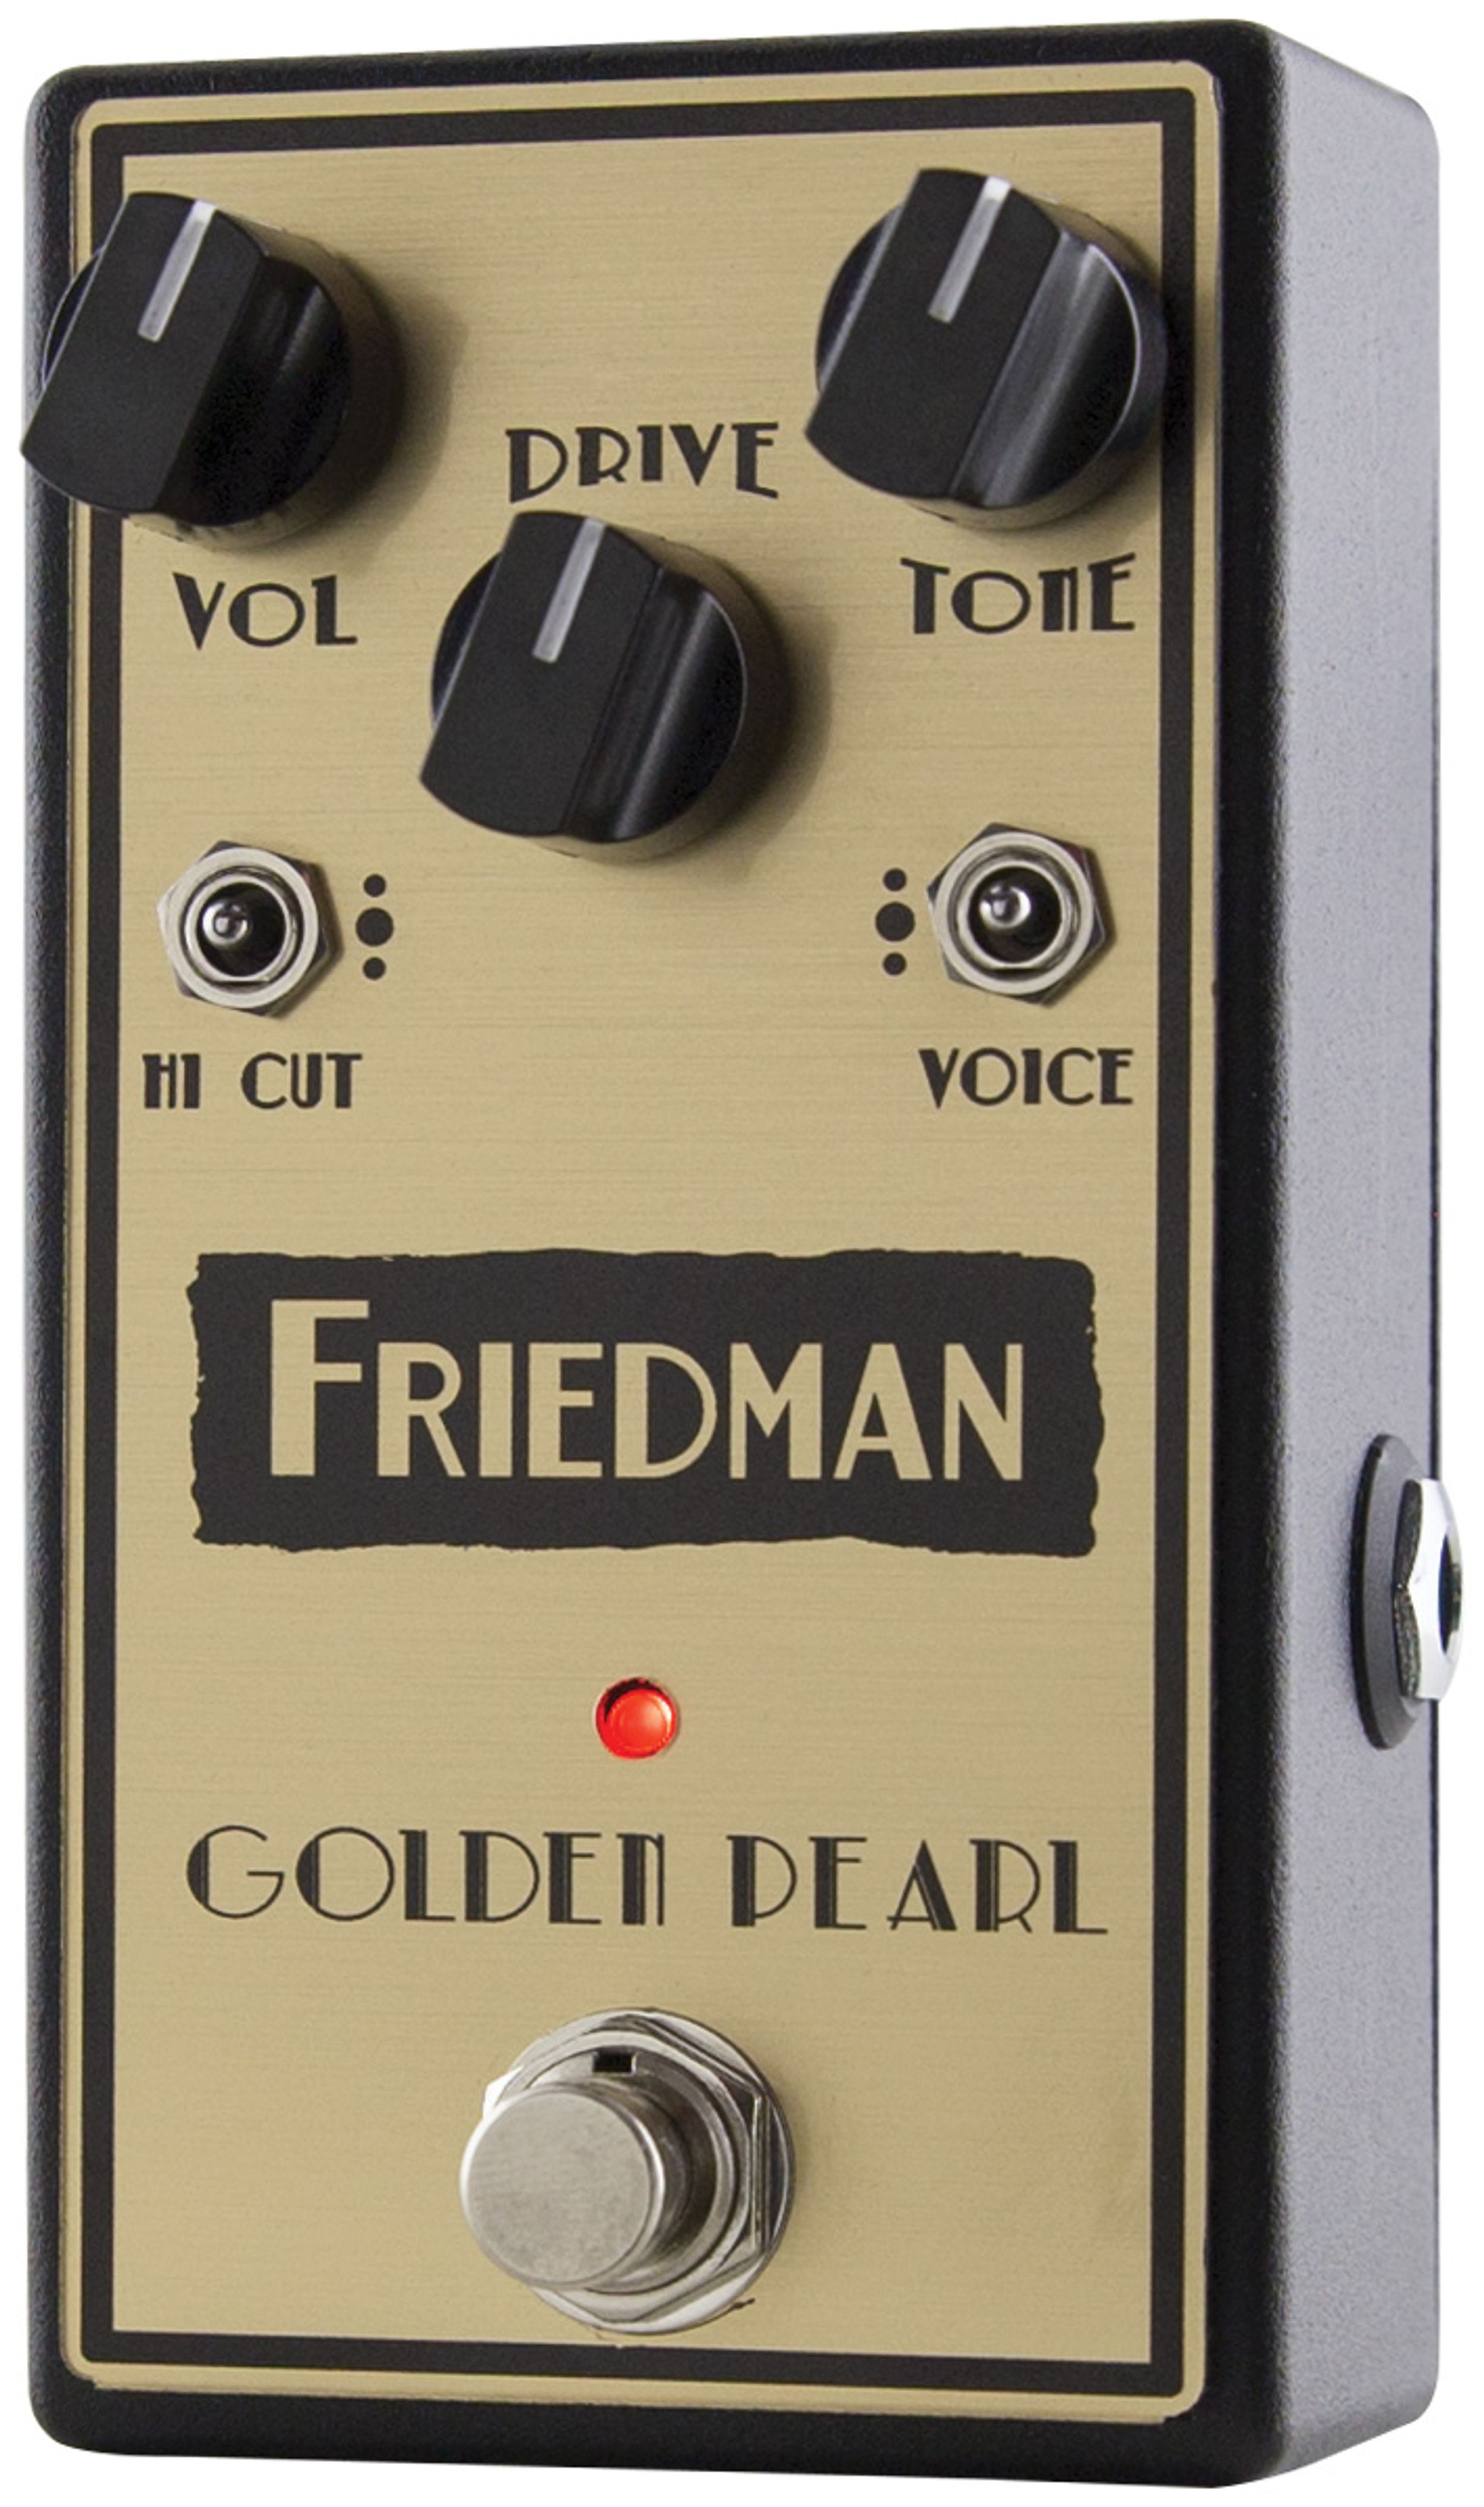 Quick Hit: Friedman Golden Pearl Review